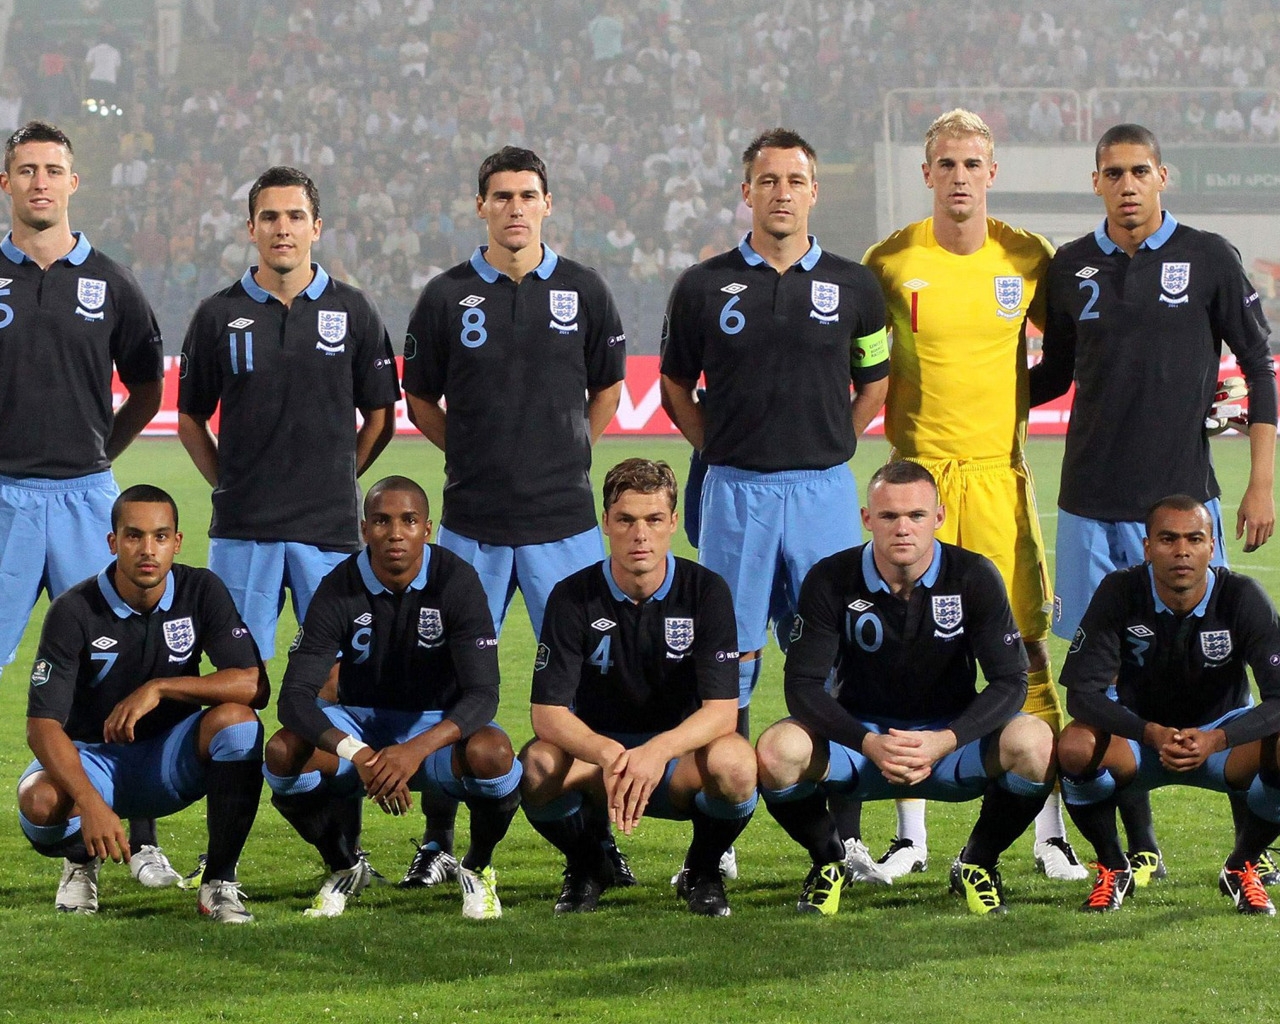 England National Team for 1280 x 1024 resolution